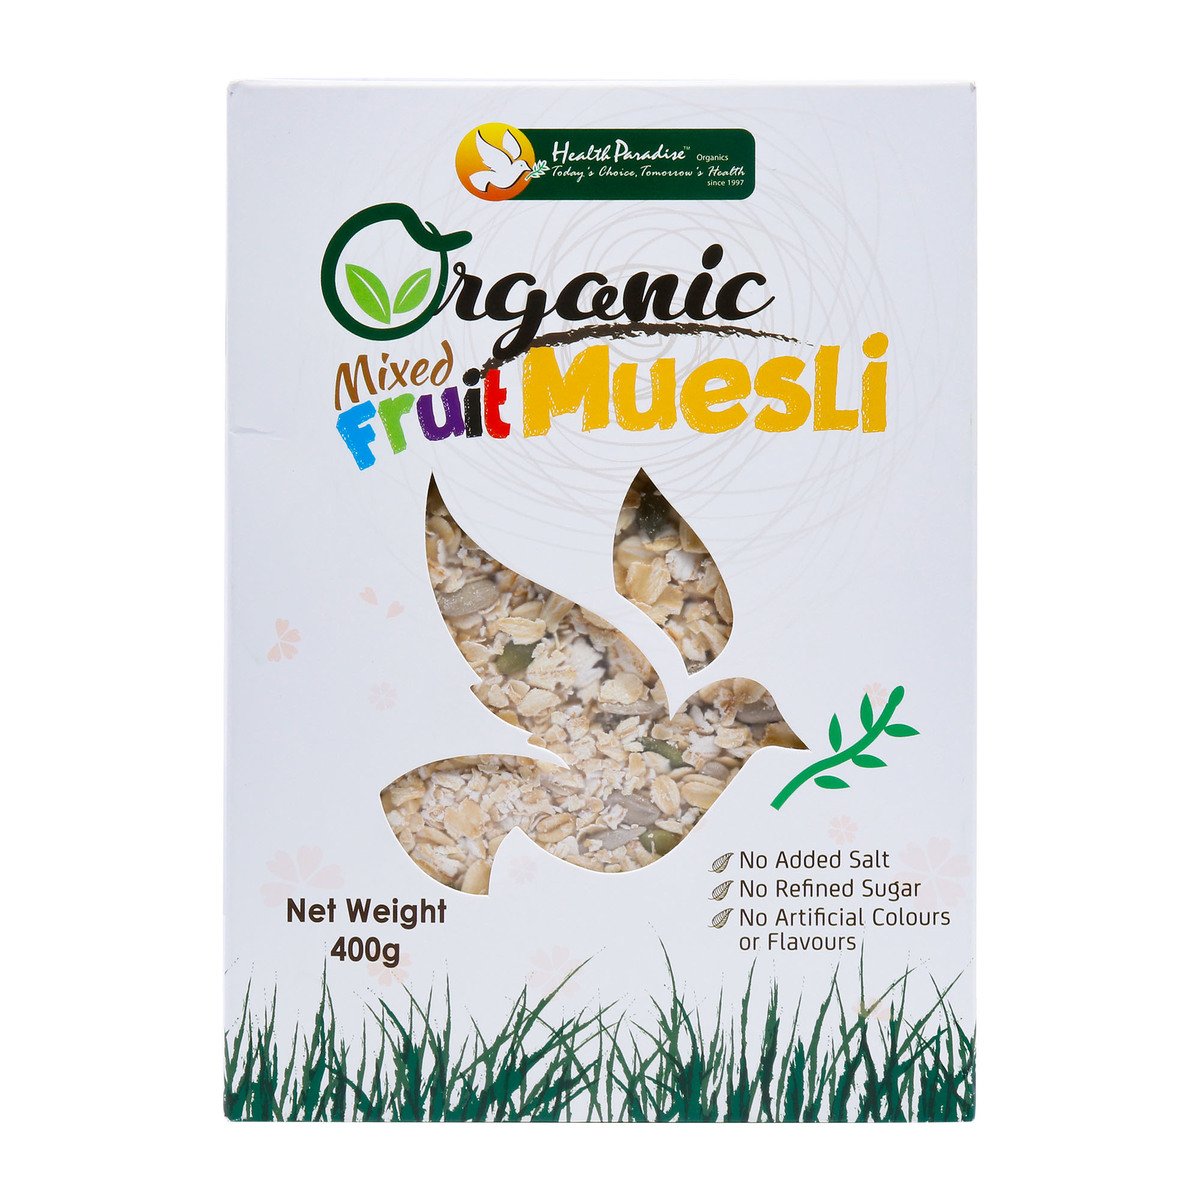 Health Paradise Organic Mixed Fruit Muesli 400g